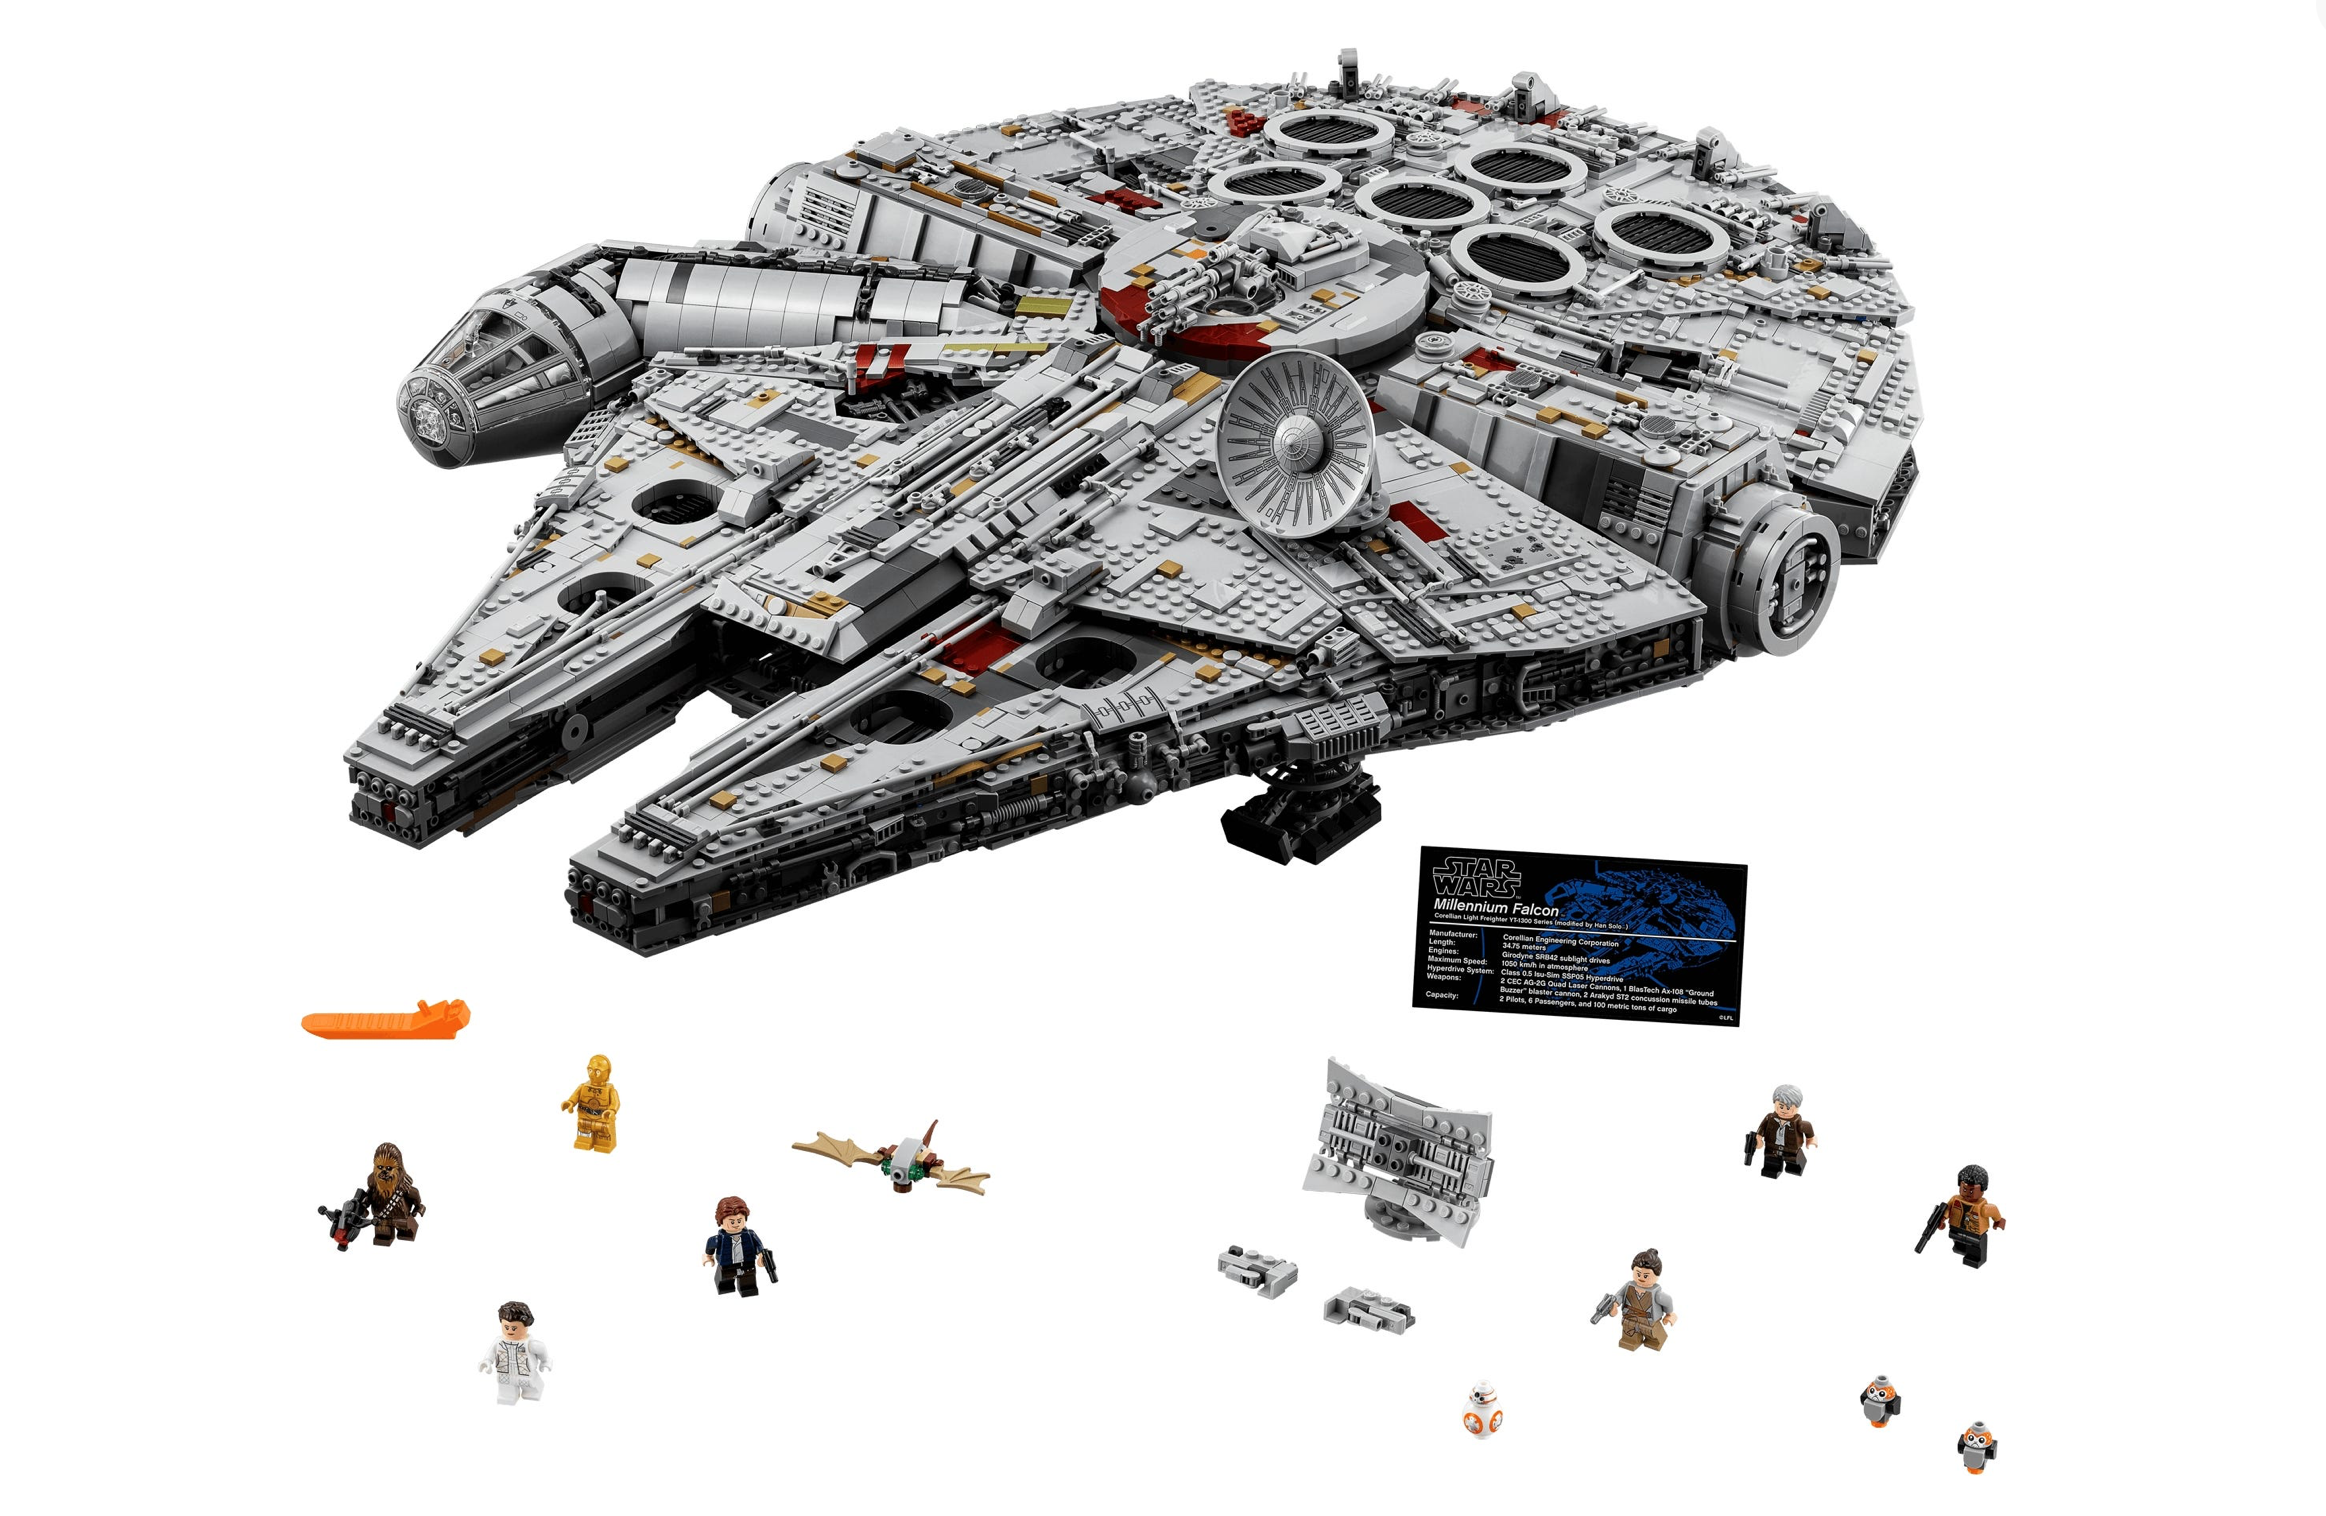 LEGO UCS millennium falcon 75192.